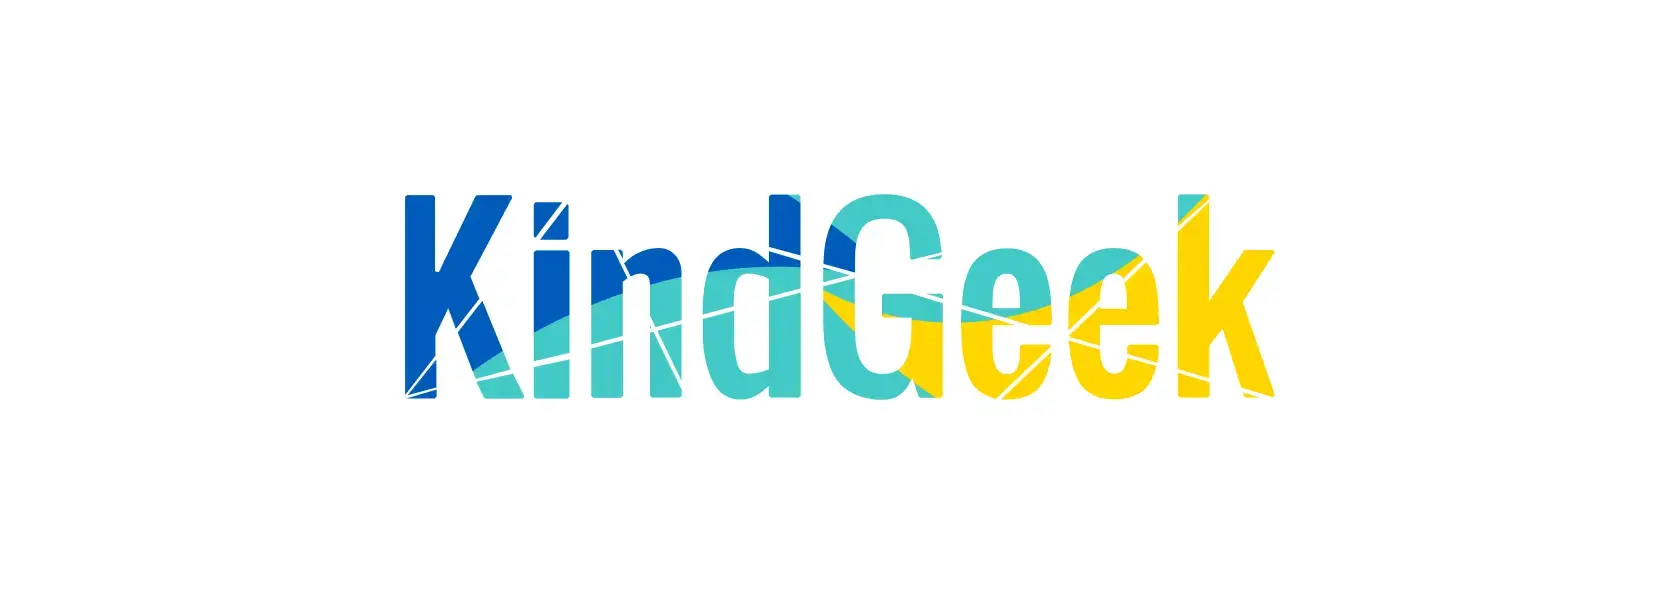 KindGeek – IT компания с добрым сердцем